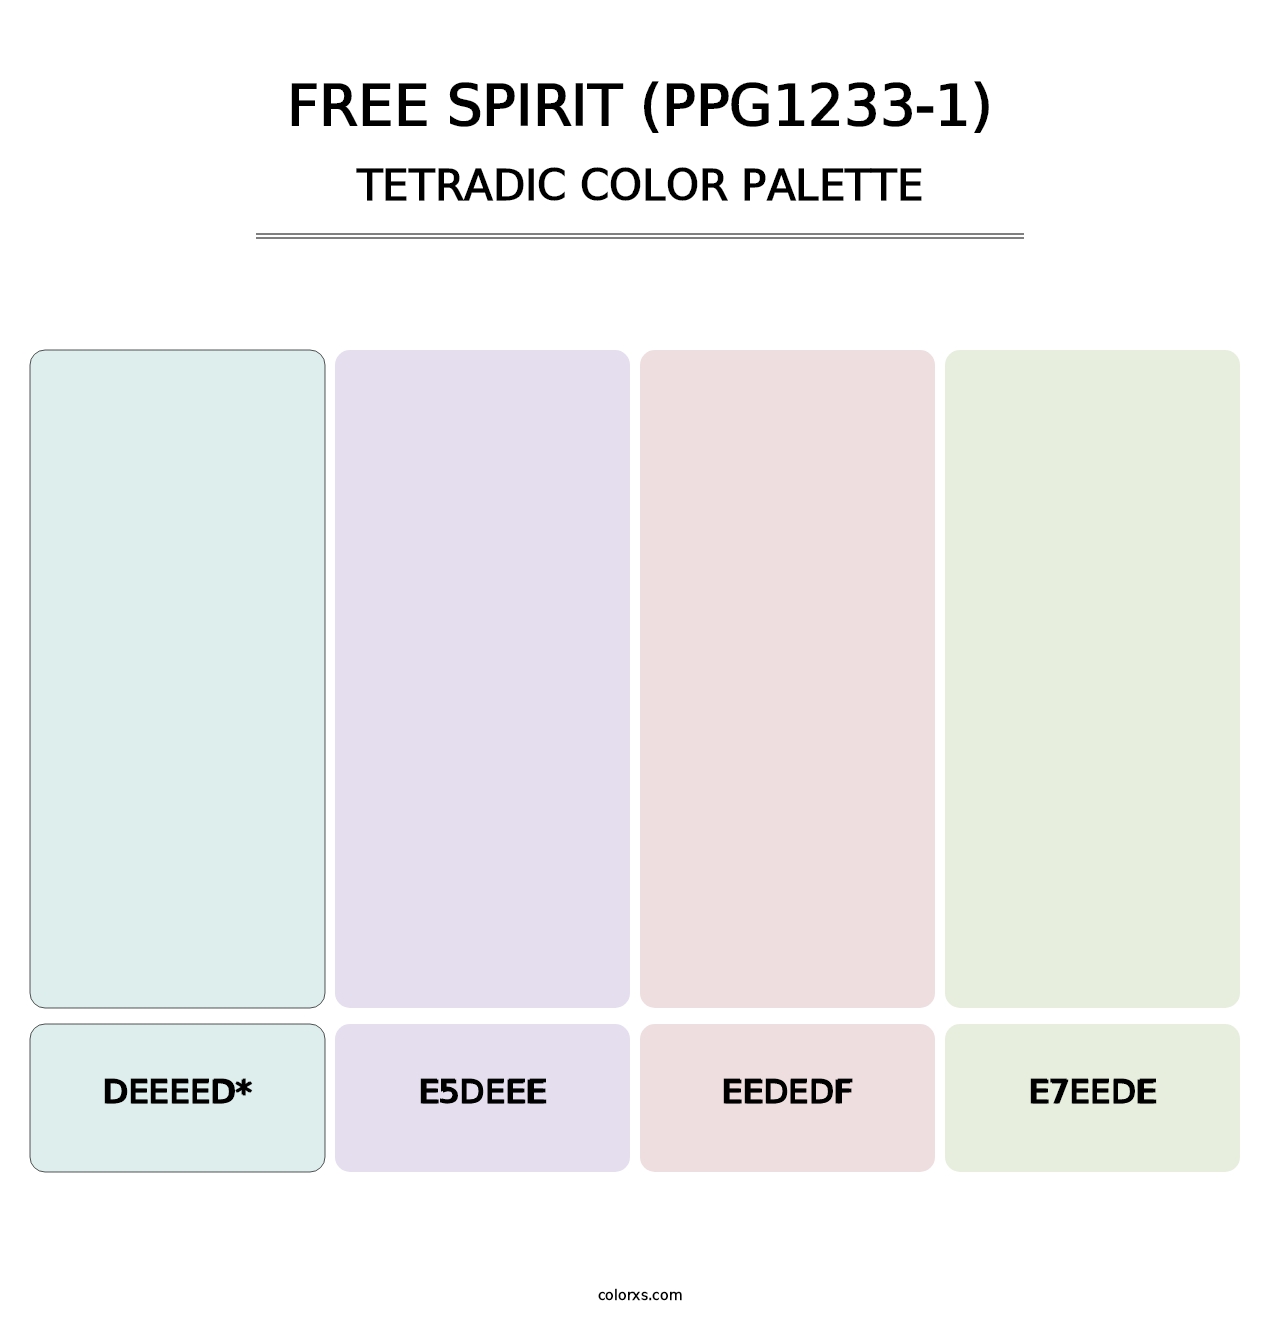 Free Spirit (PPG1233-1) - Tetradic Color Palette